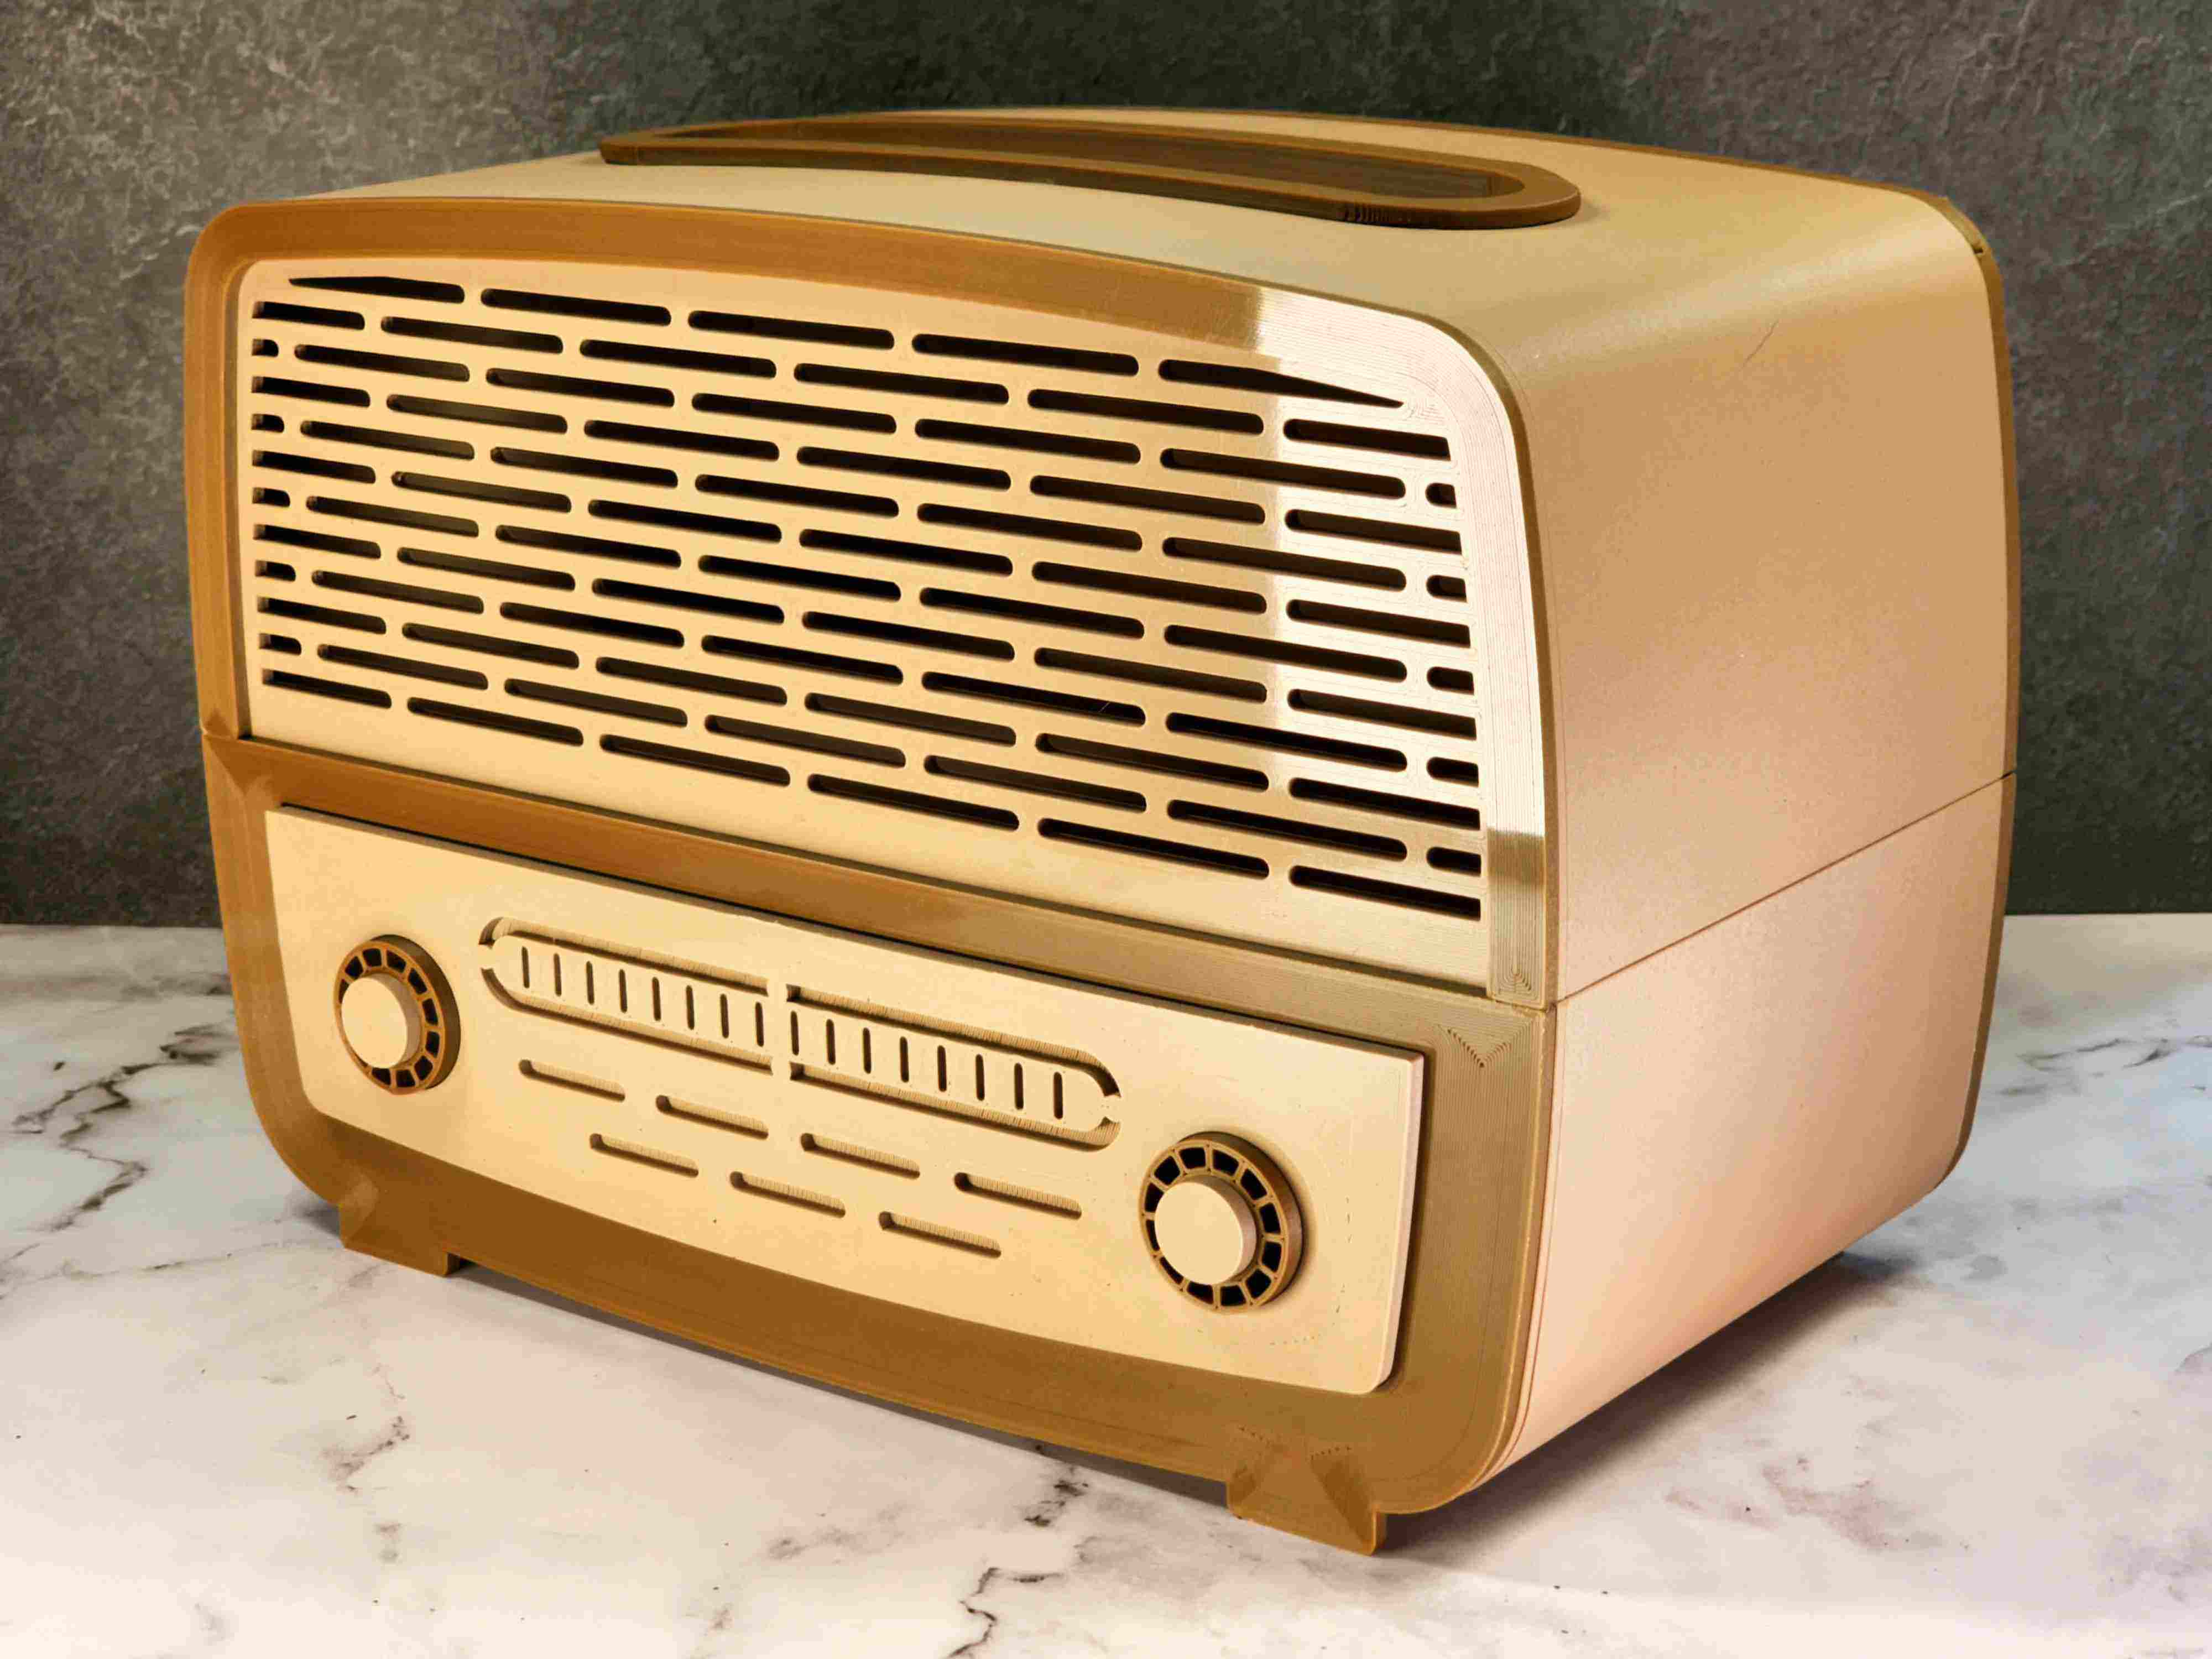 Vintage Radio Tissue Dispenser with Storage Compartment